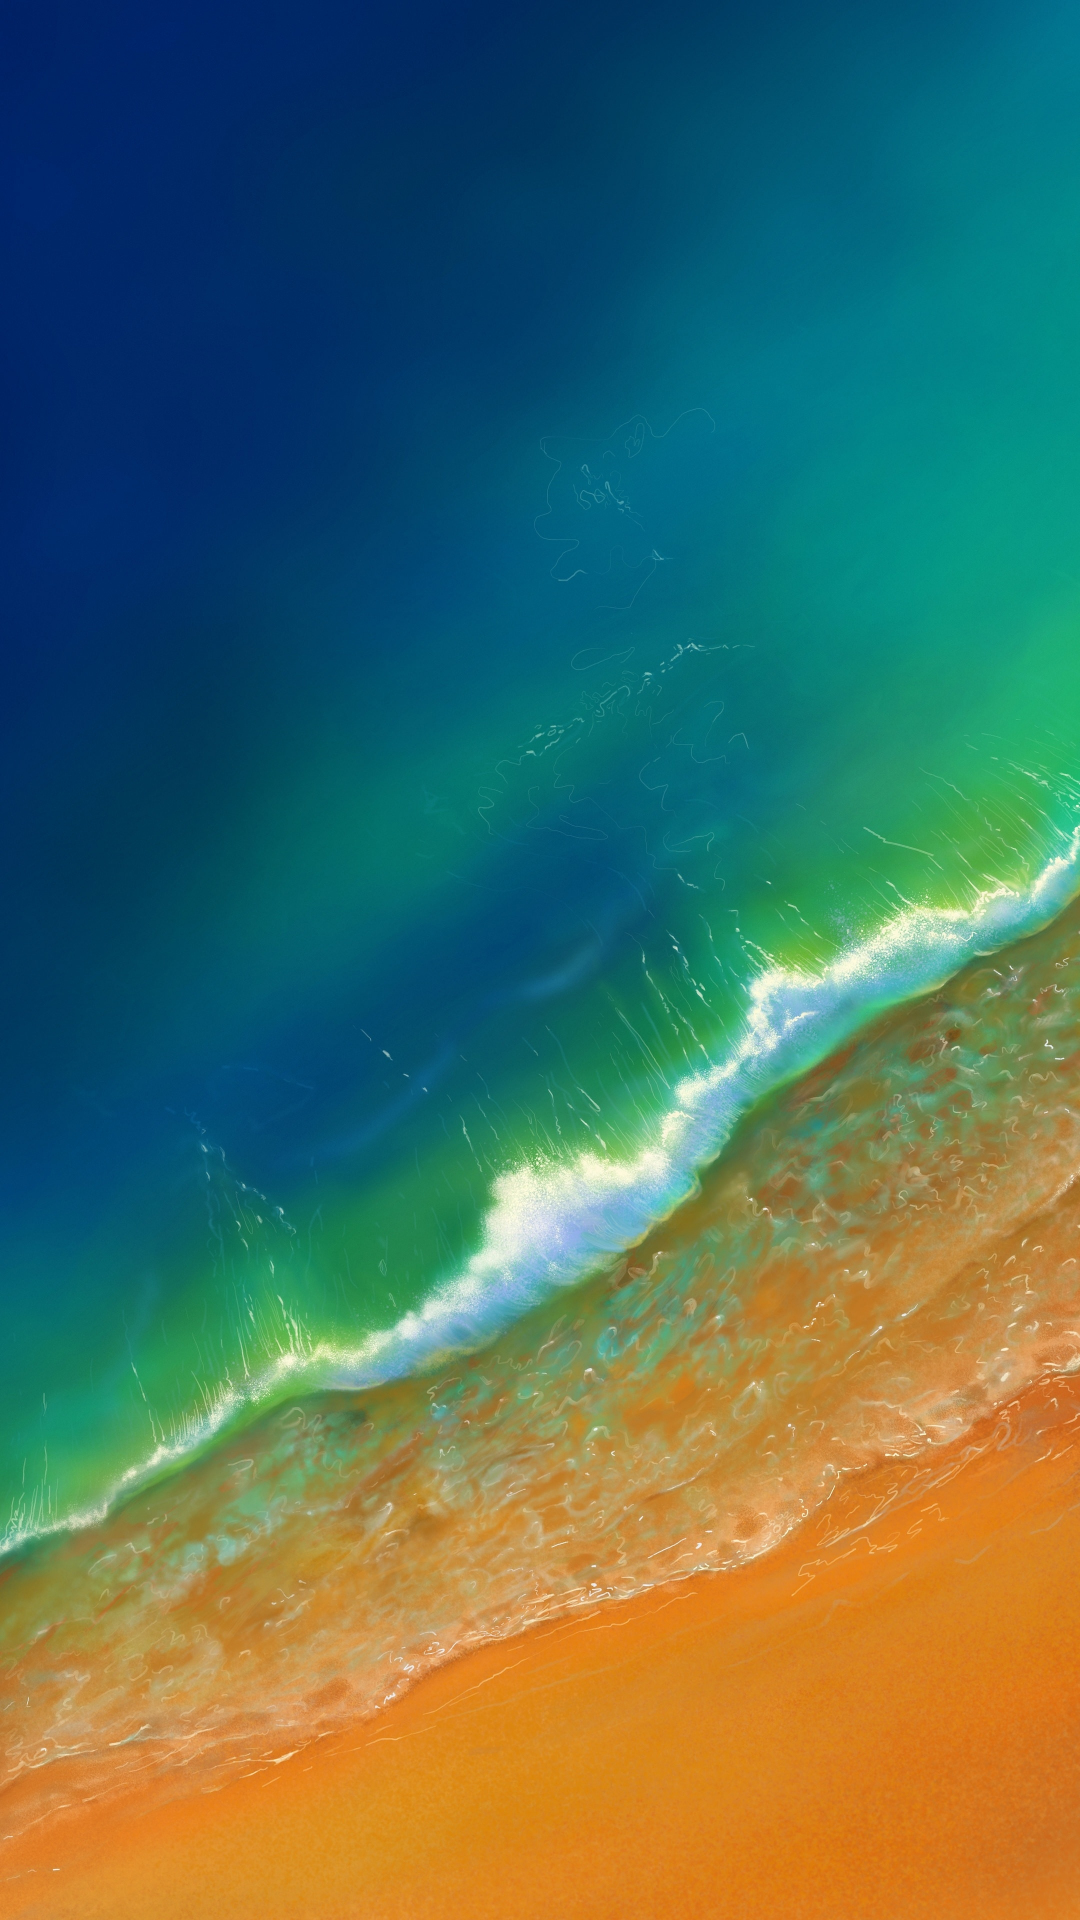 Download wallpaper 1080x1920 green ocean, sea waves, aerial view, beach ...